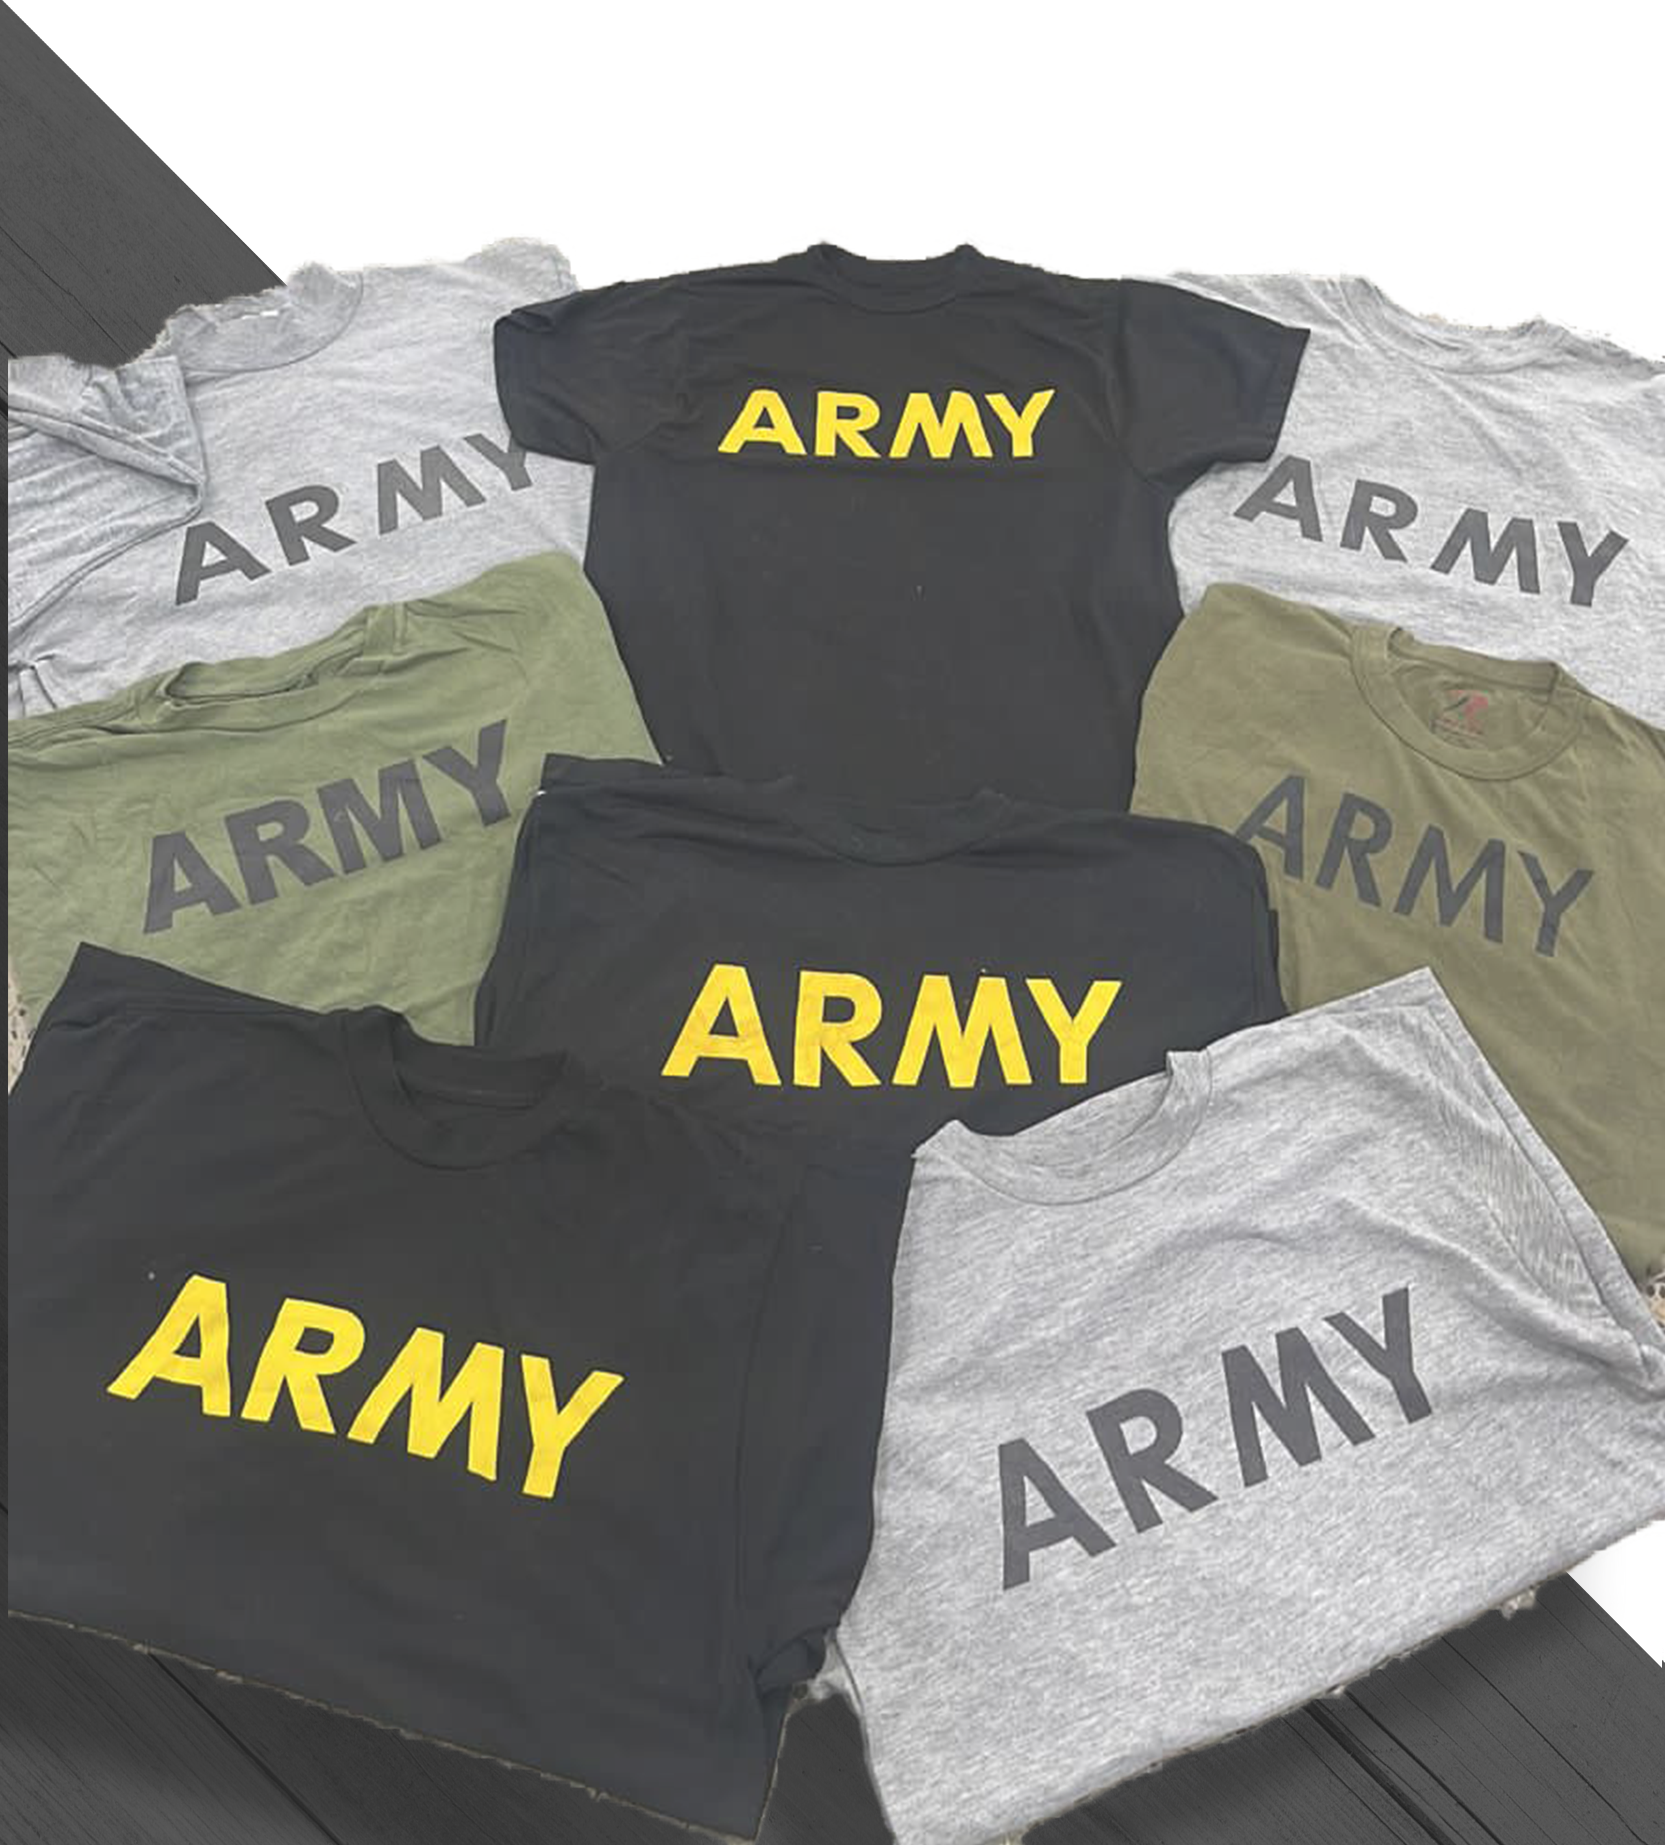 Army T-Shirt 45kg Bale